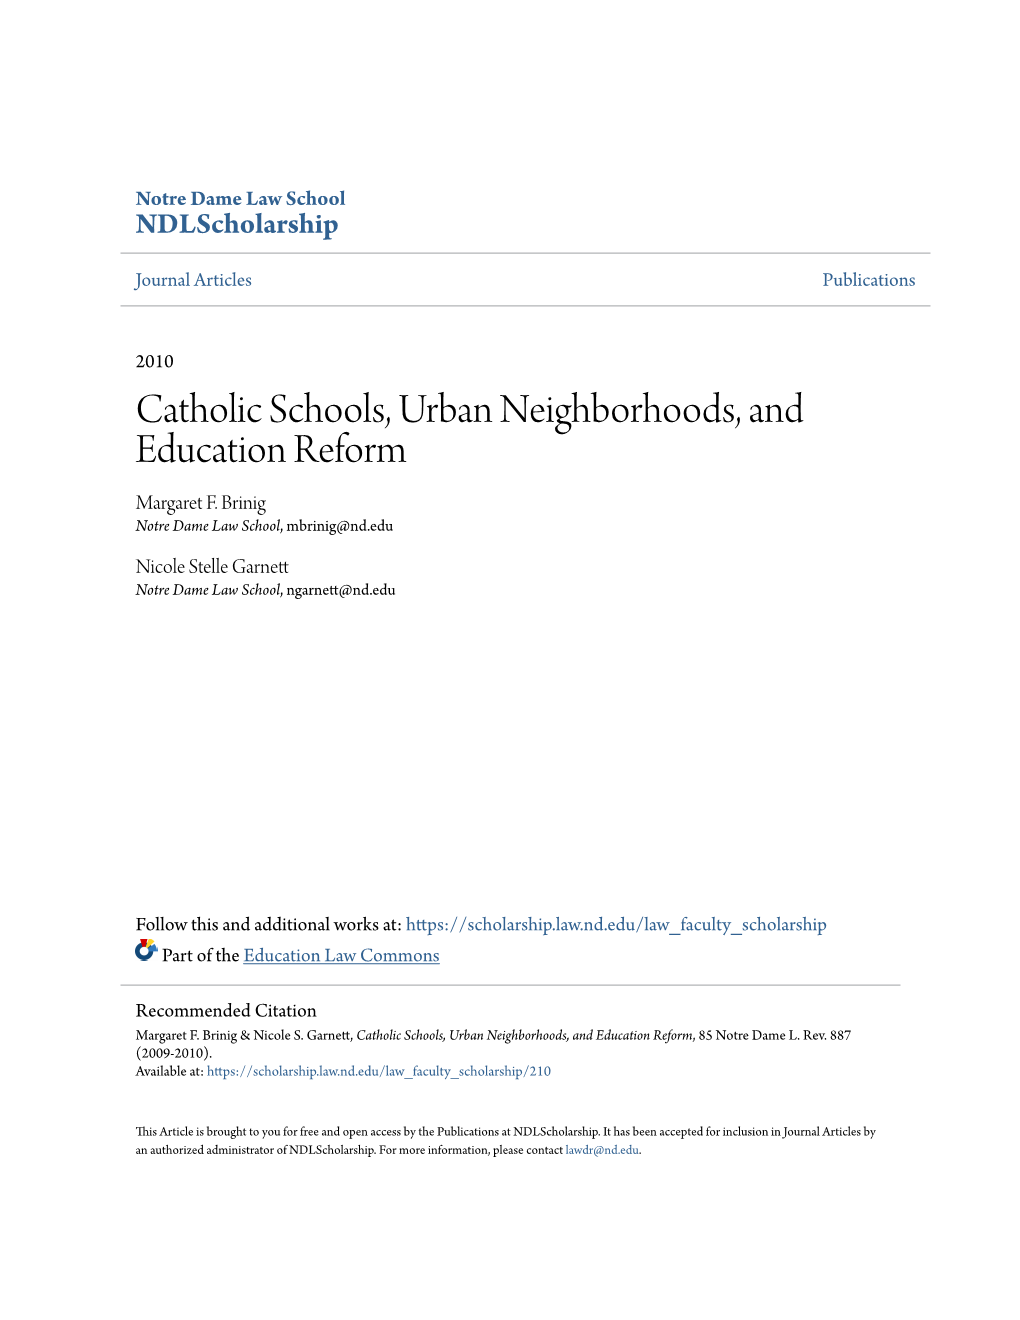 Catholic Schools, Urban Neighborhoods, and Education Reform Margaret F